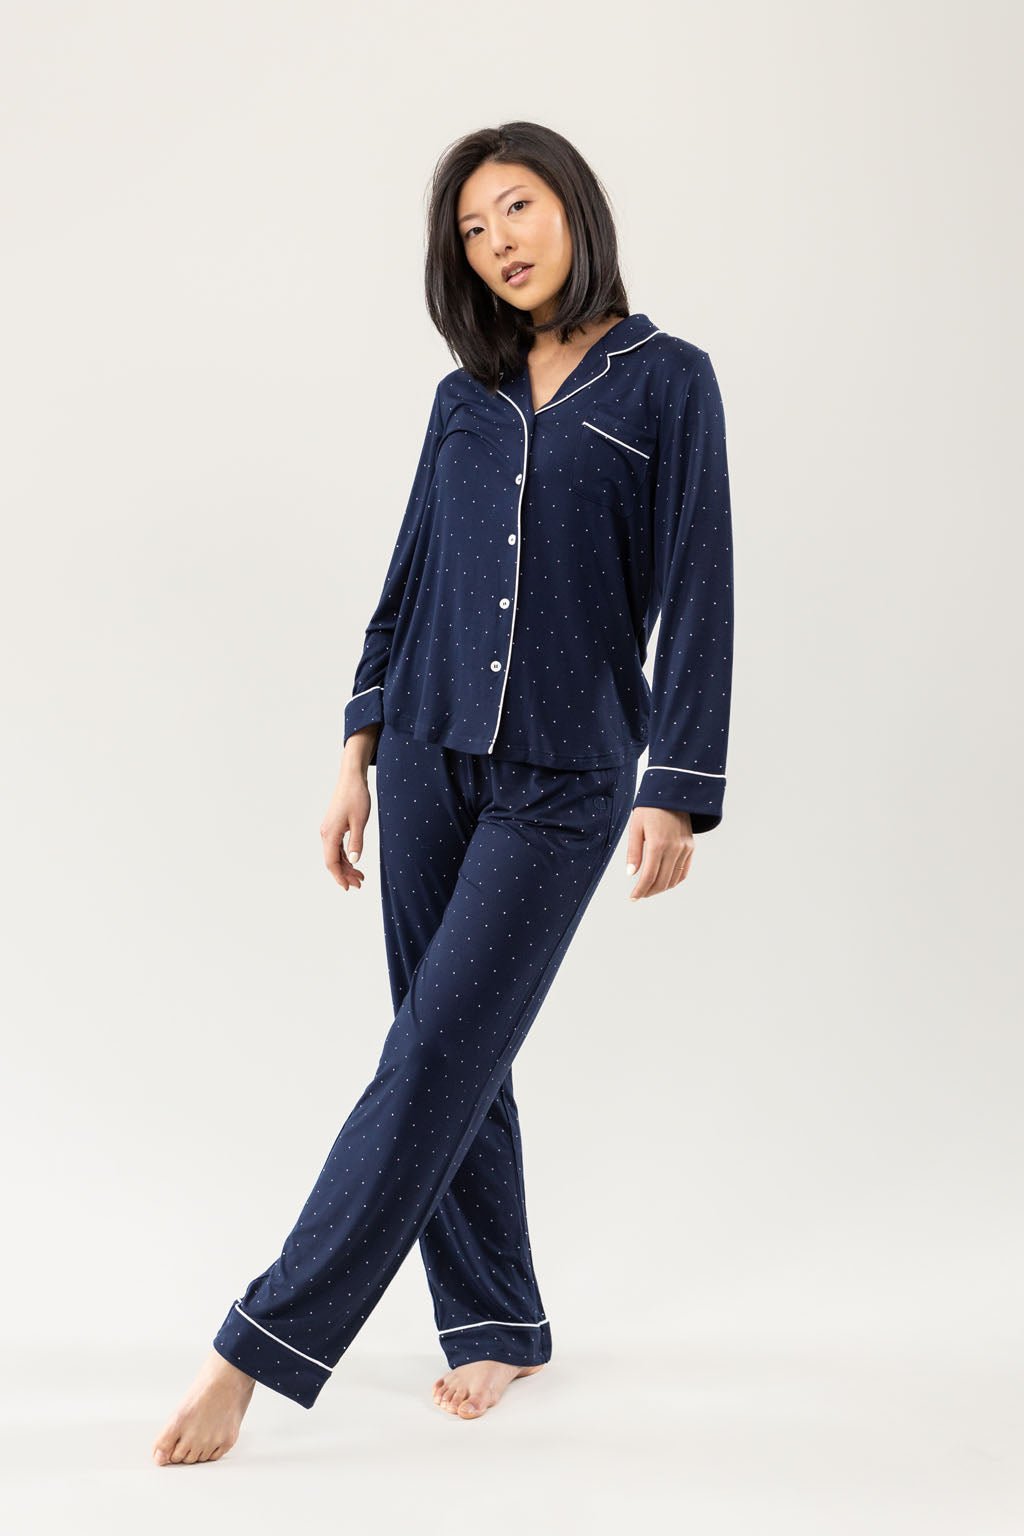 ODAWA Apricot Women's Pajama Pants Comfy Stretch Plus Size Pajamas